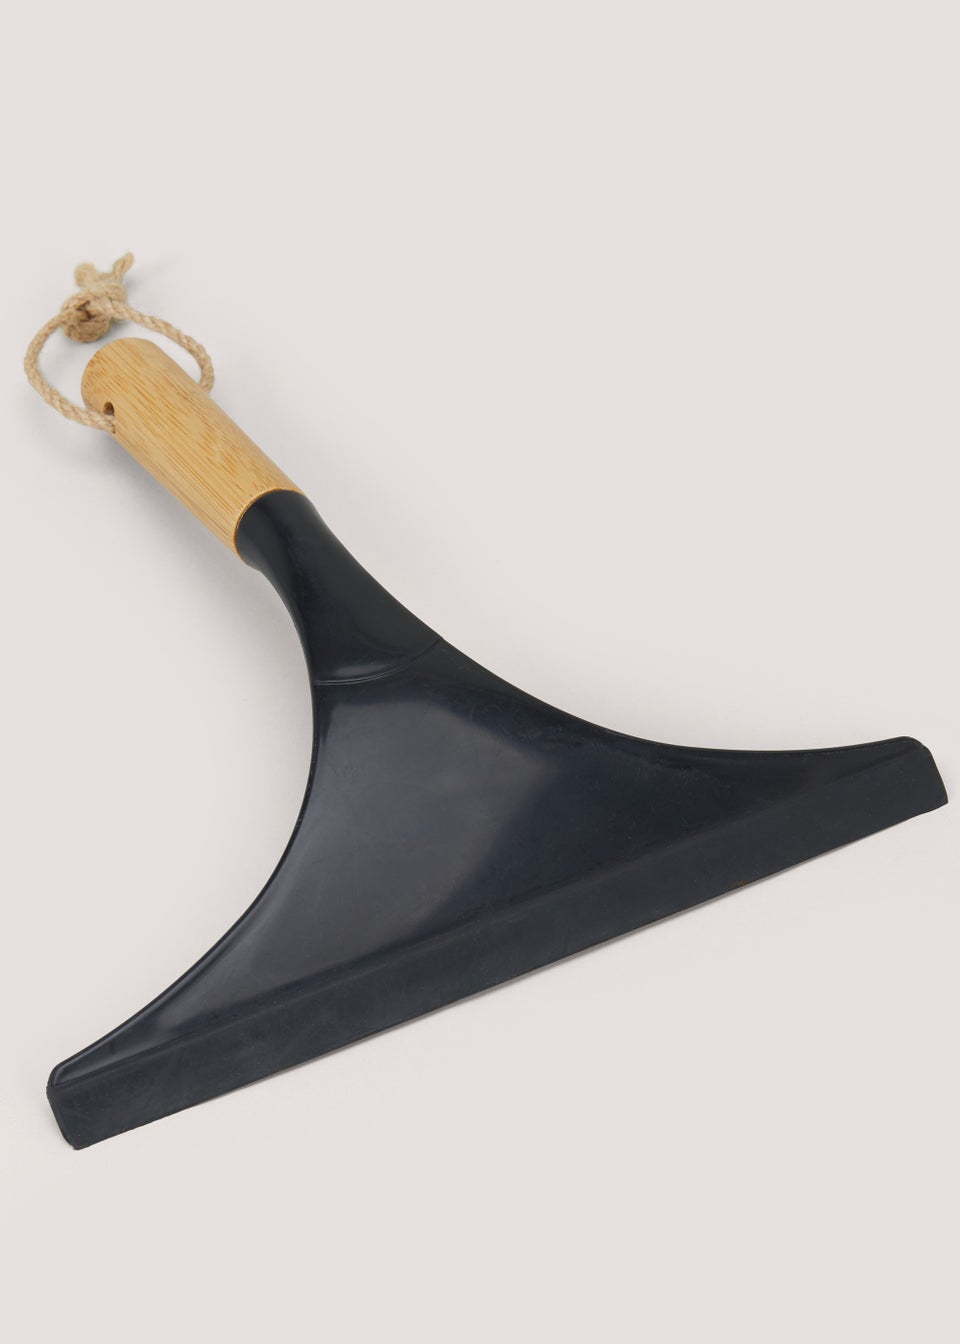 Wooden Handle Squeegee (25cm x 23cm x 5cm)